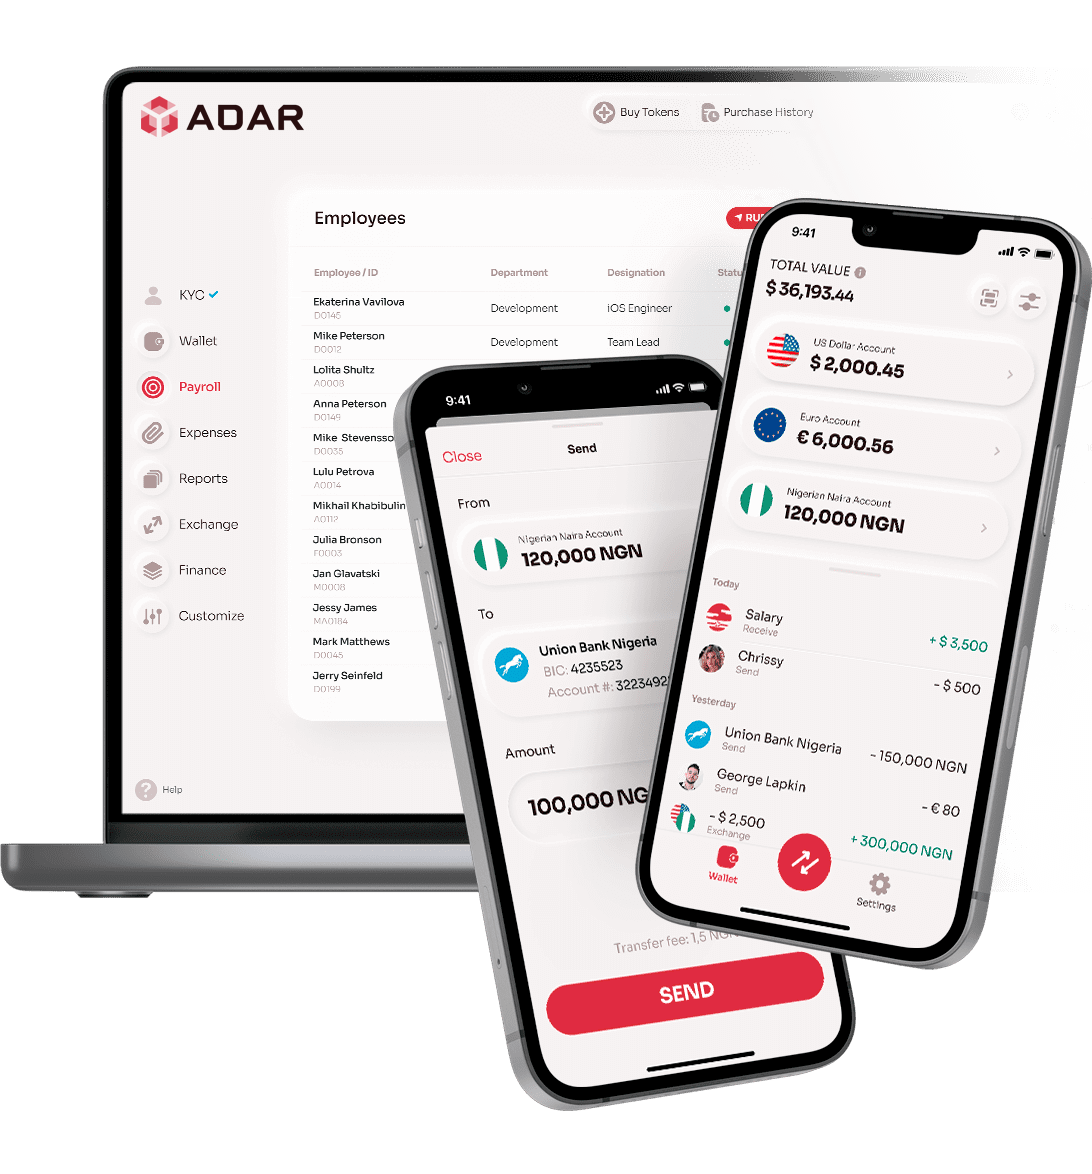 ADAR desktop and mobile apps